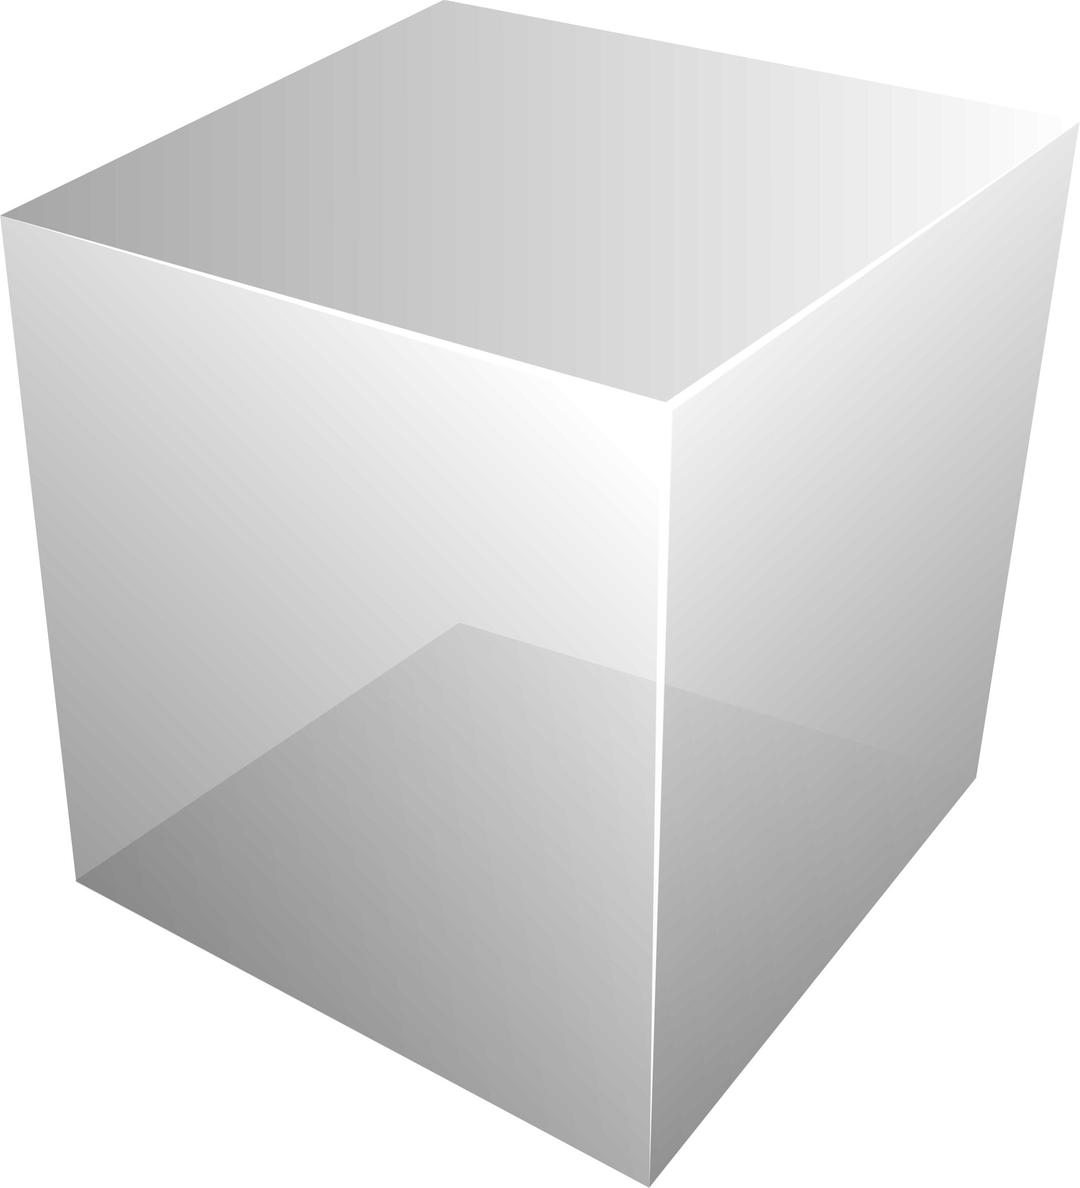 Cube transparent png transparent